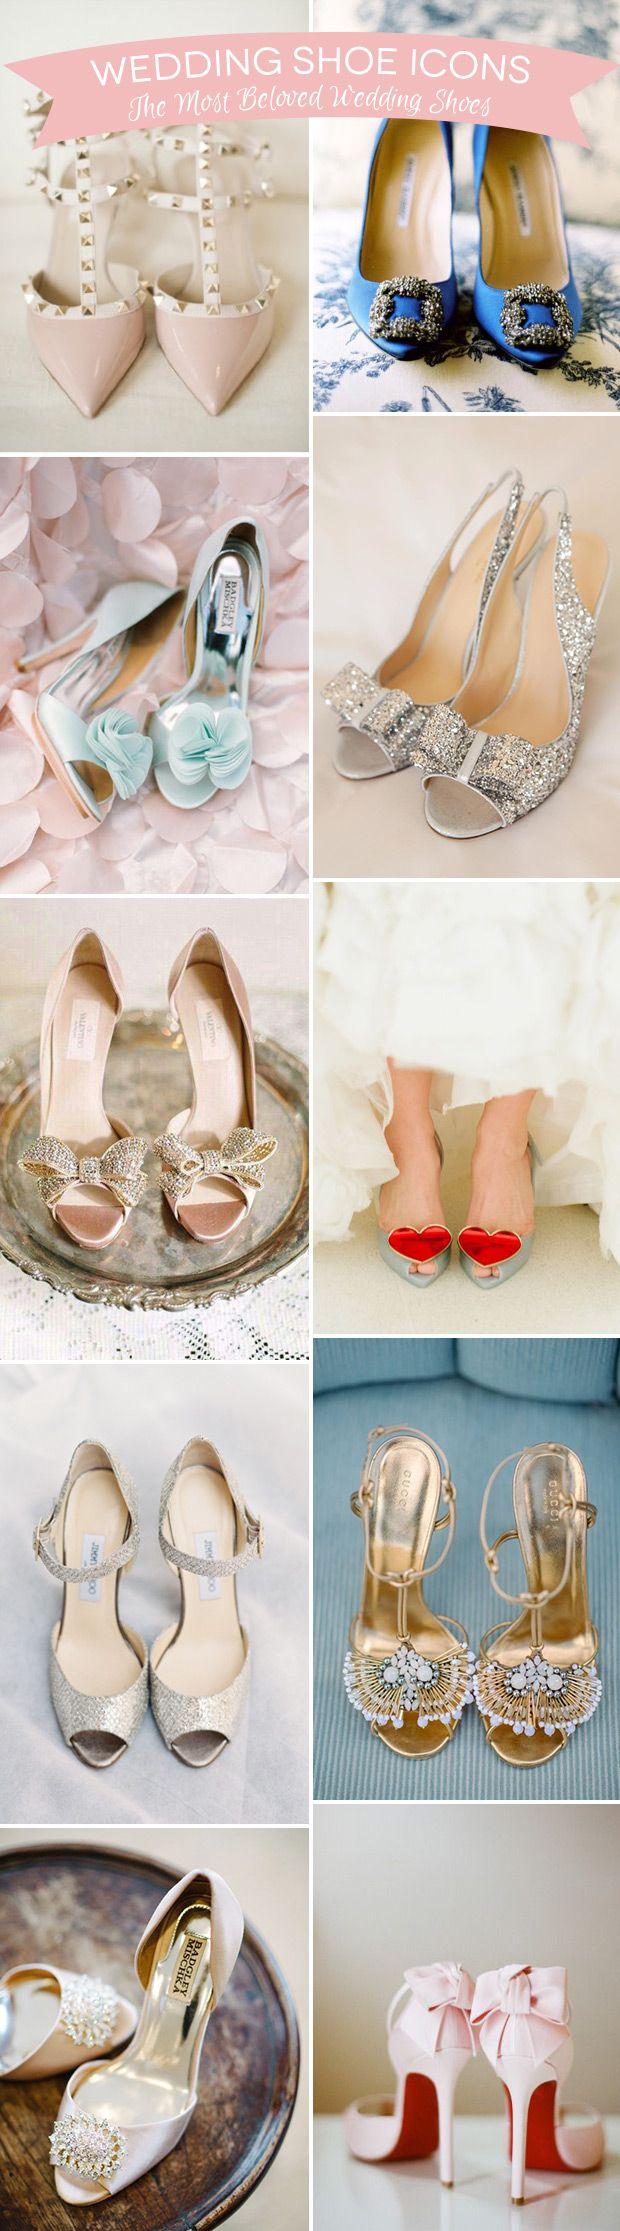 زفاف - Shoe Icons - The 11 Most Popular Wedding Shoes Ever